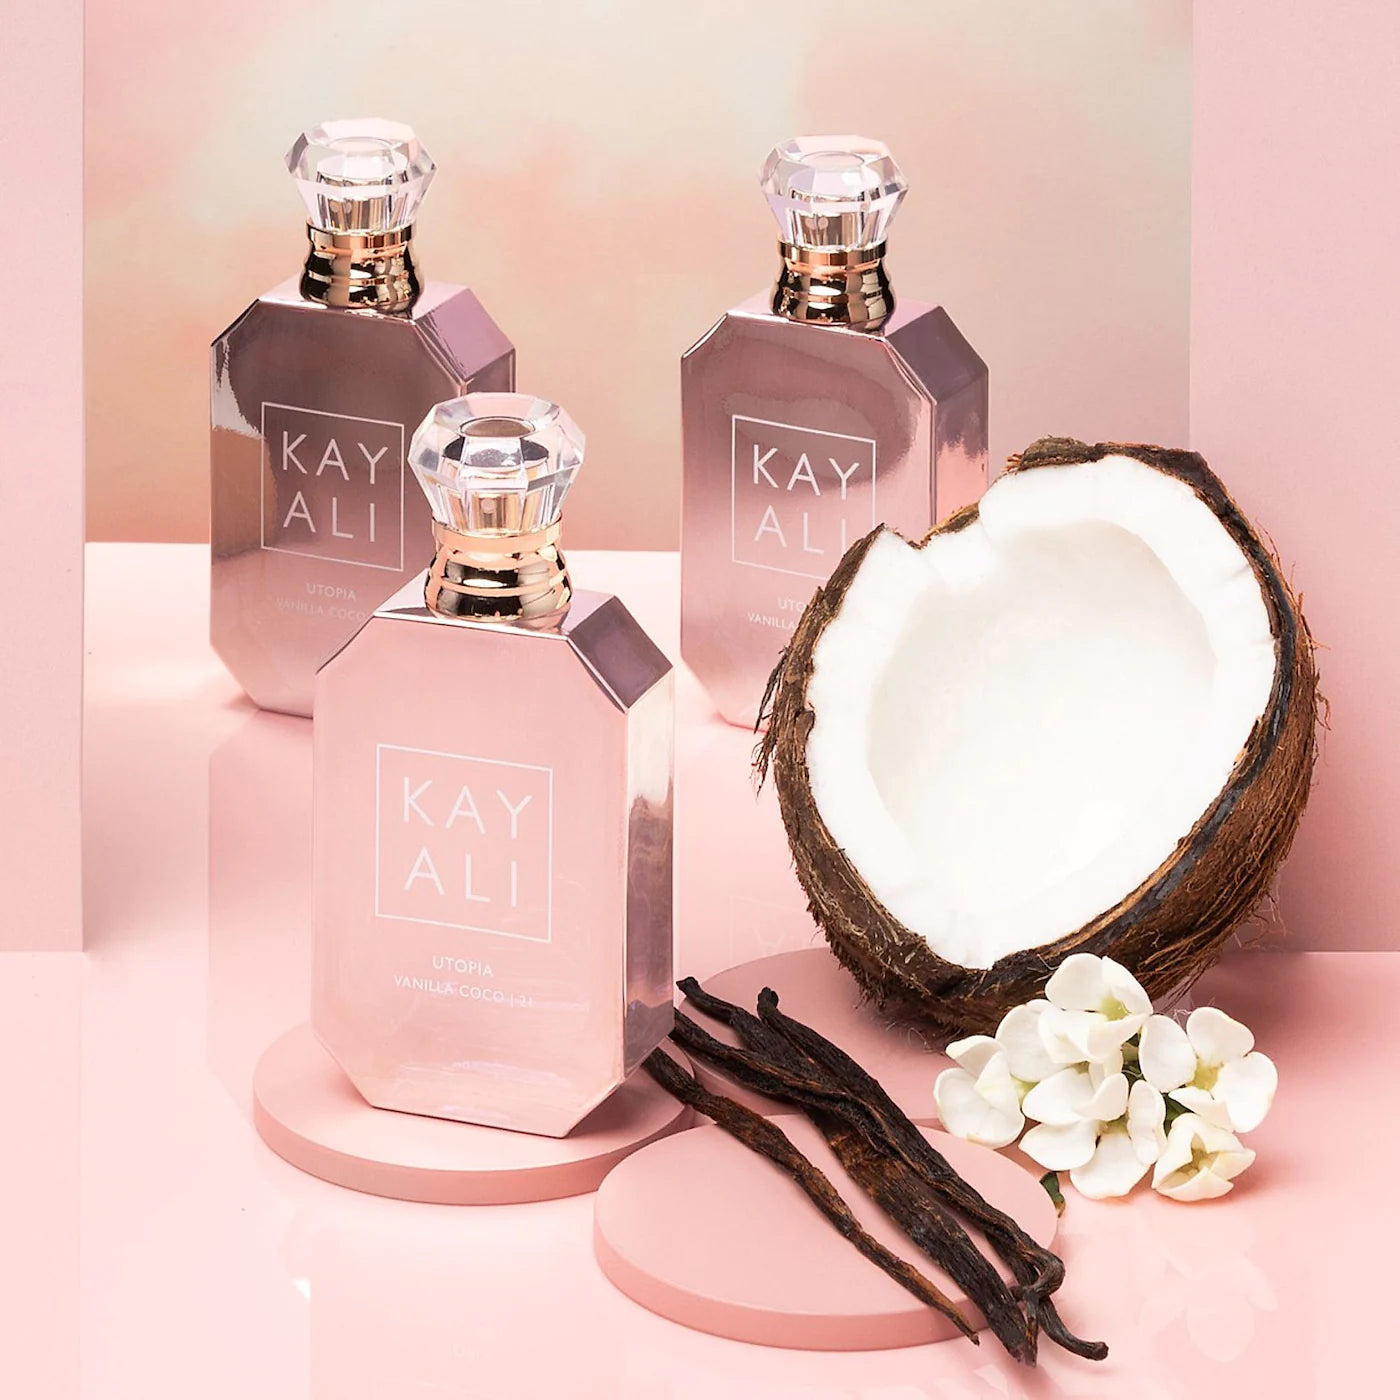 Buy Kayali Vanilla Coco 31 EdP perfume Sample - Decanted Fragrances and  Perfume Samples - The Perfumed Court